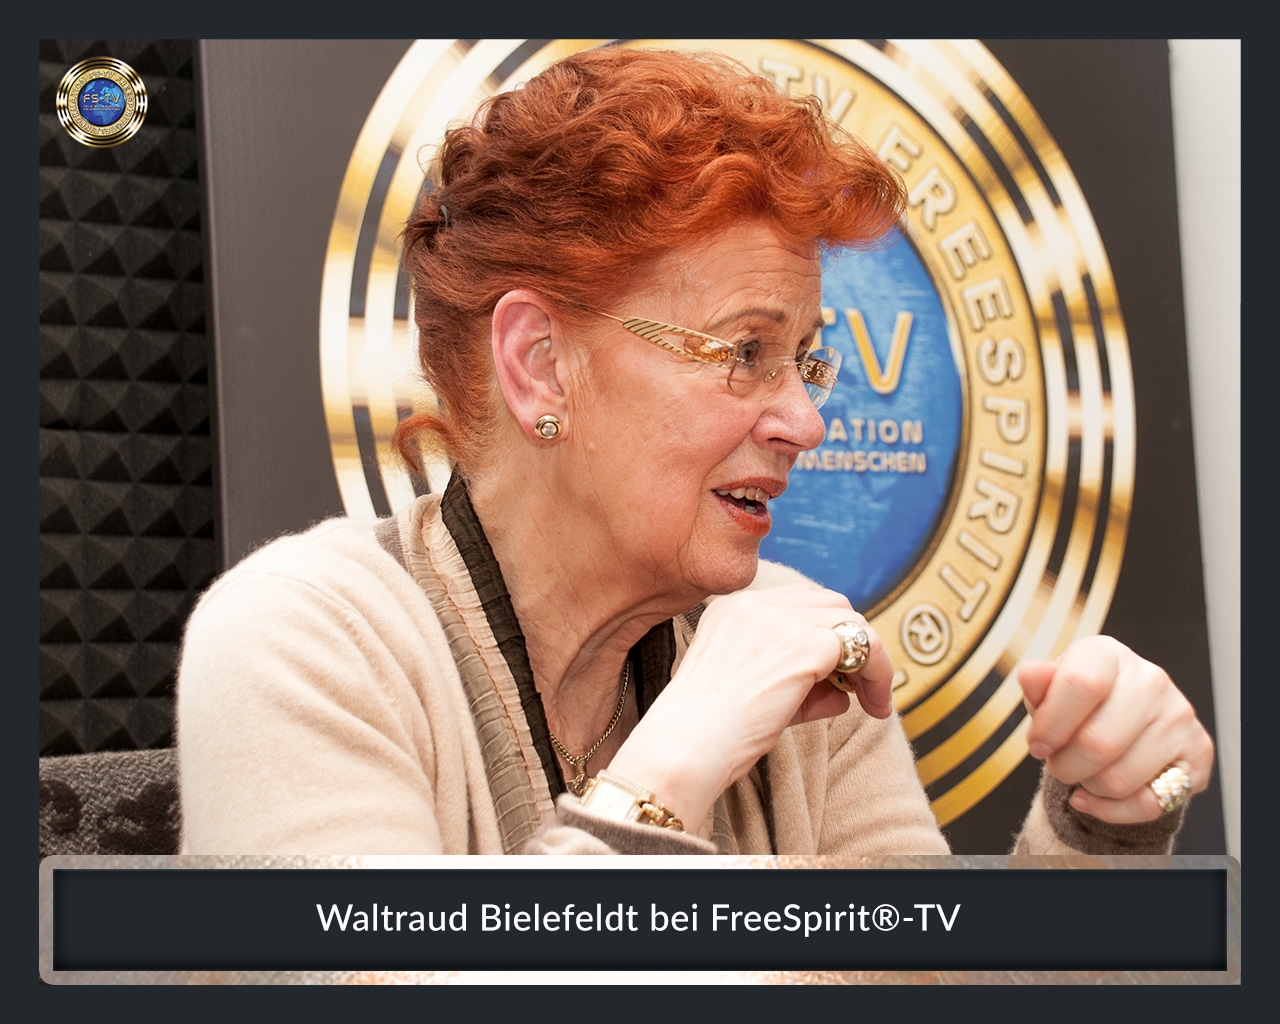 FS-TV-Bildergallerie-Waltraud-Bielefeldt-5